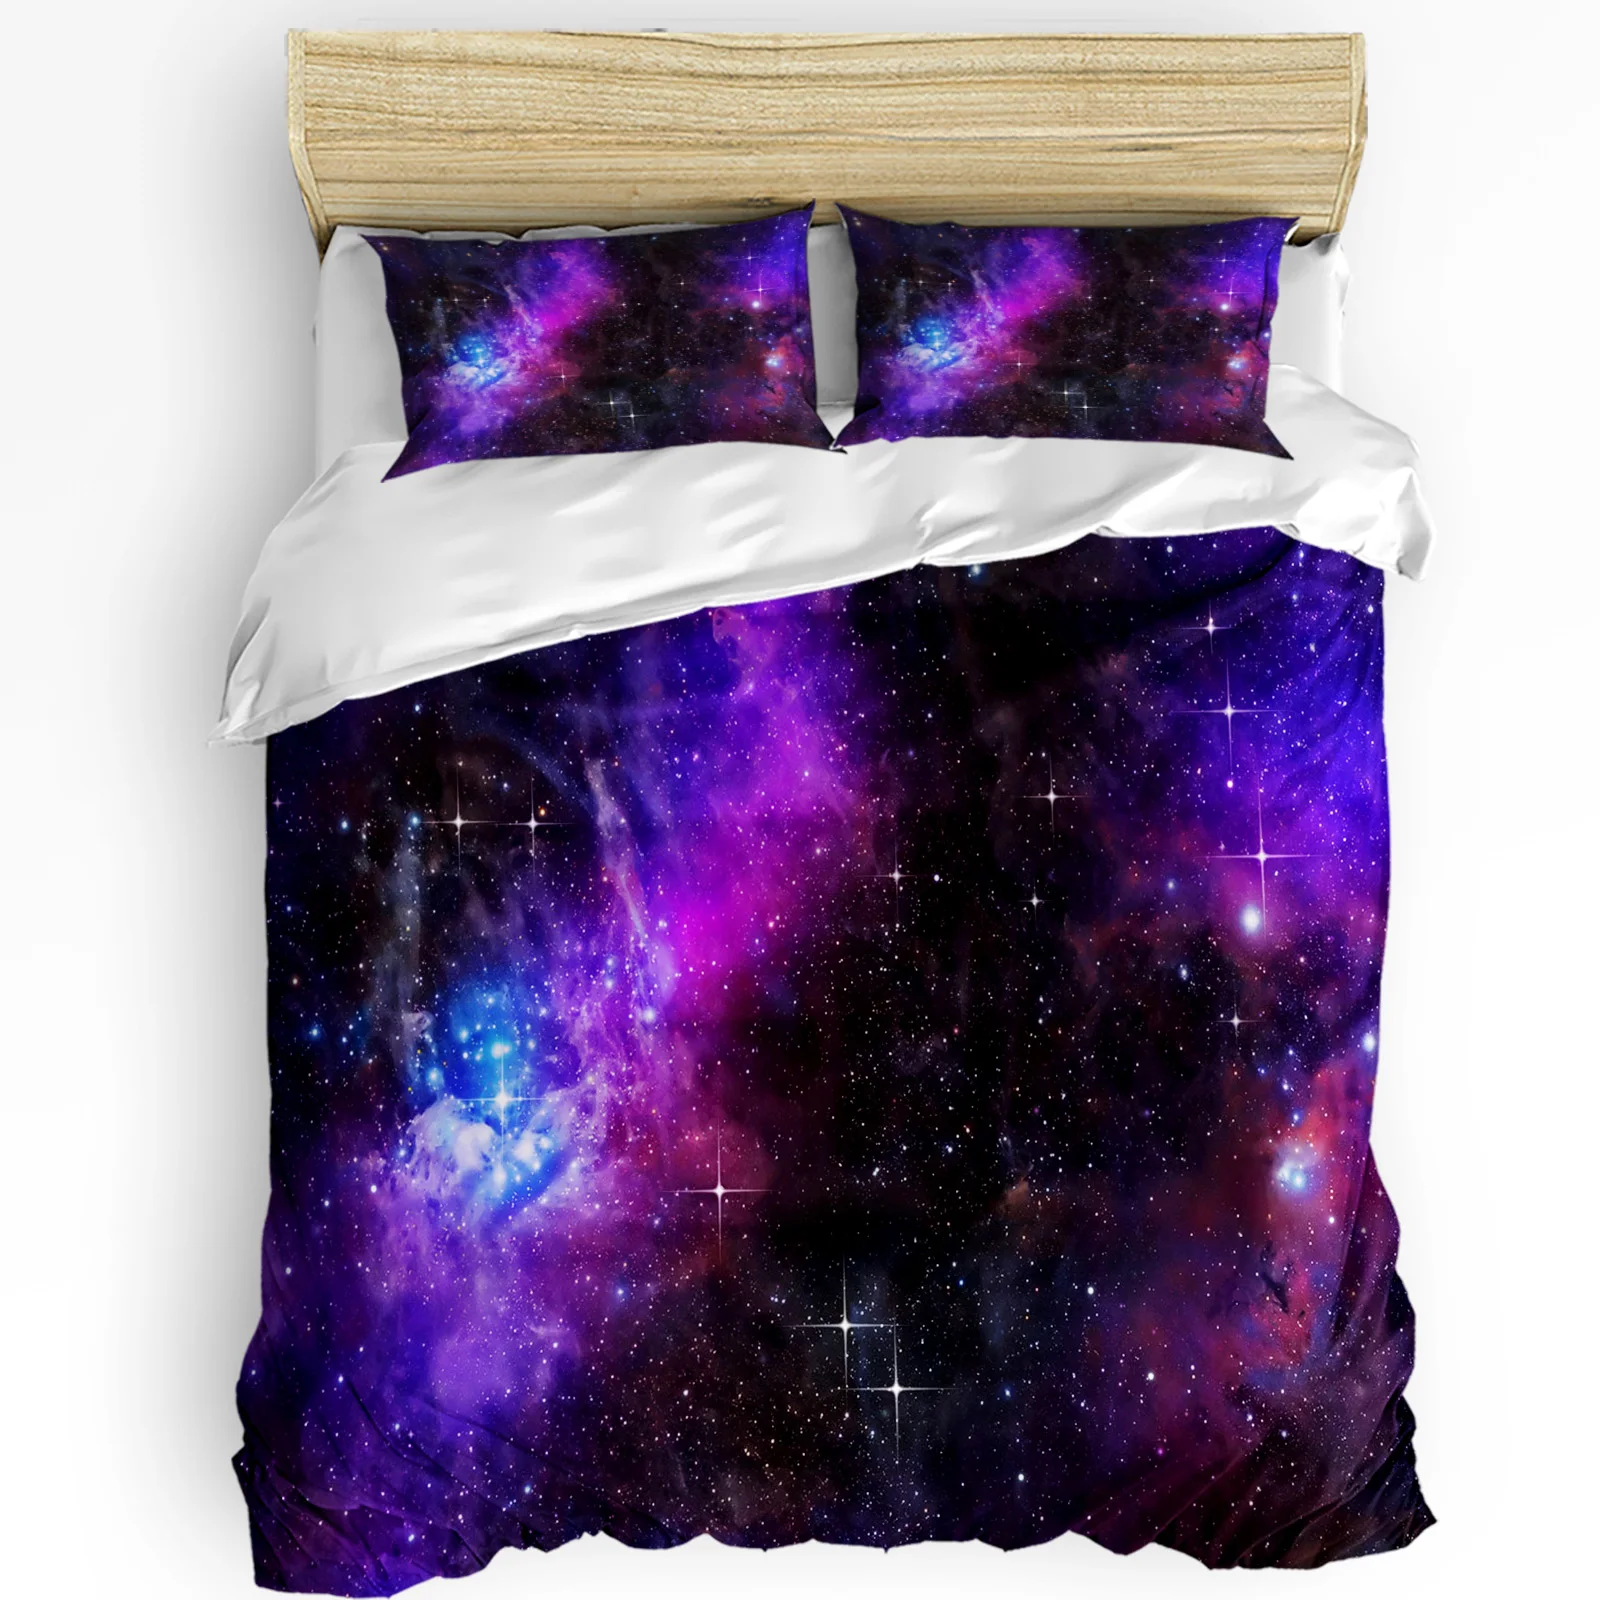 

Purple Nebula Starry Sky Printed Comfort Duvet Cover Pillow Case Home Textile Quilt Cover Boy Kid Teen Girl 3pcs Bedding Set